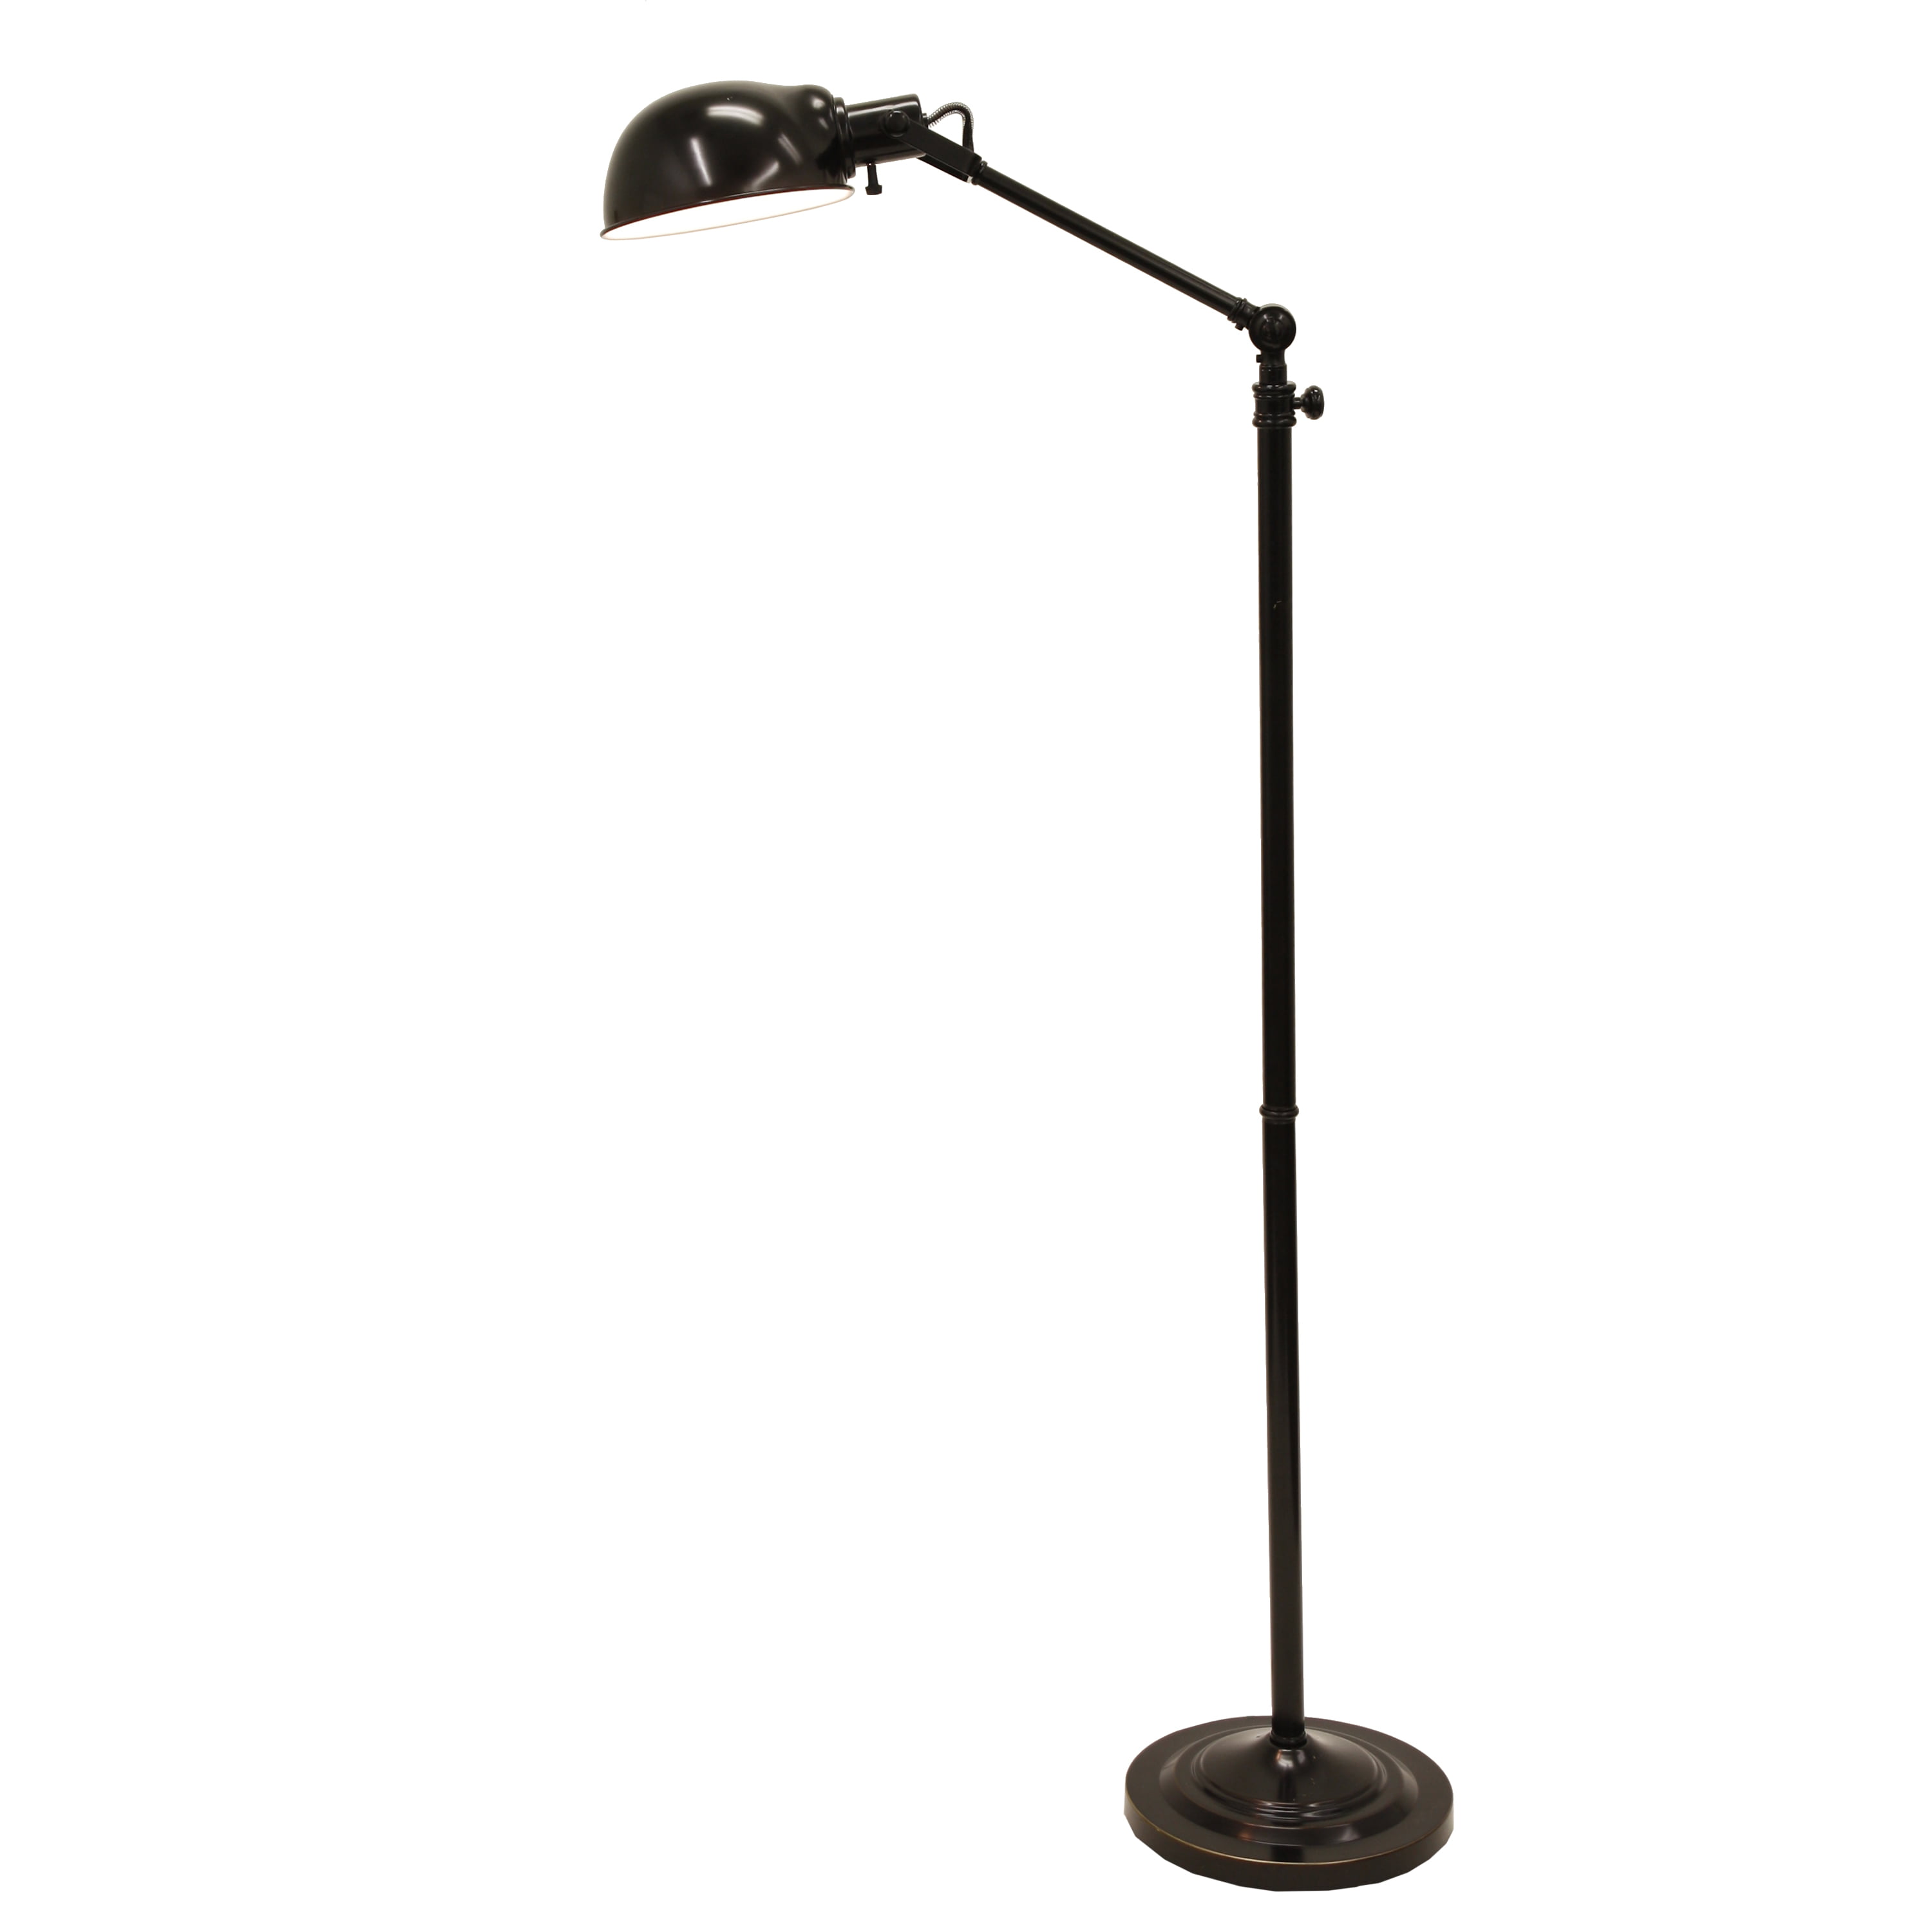 Cal Lighting Dark Bronze Metal Pharmacy Floor Lamp With Adjustable Pole and Swivel Head for sale online 